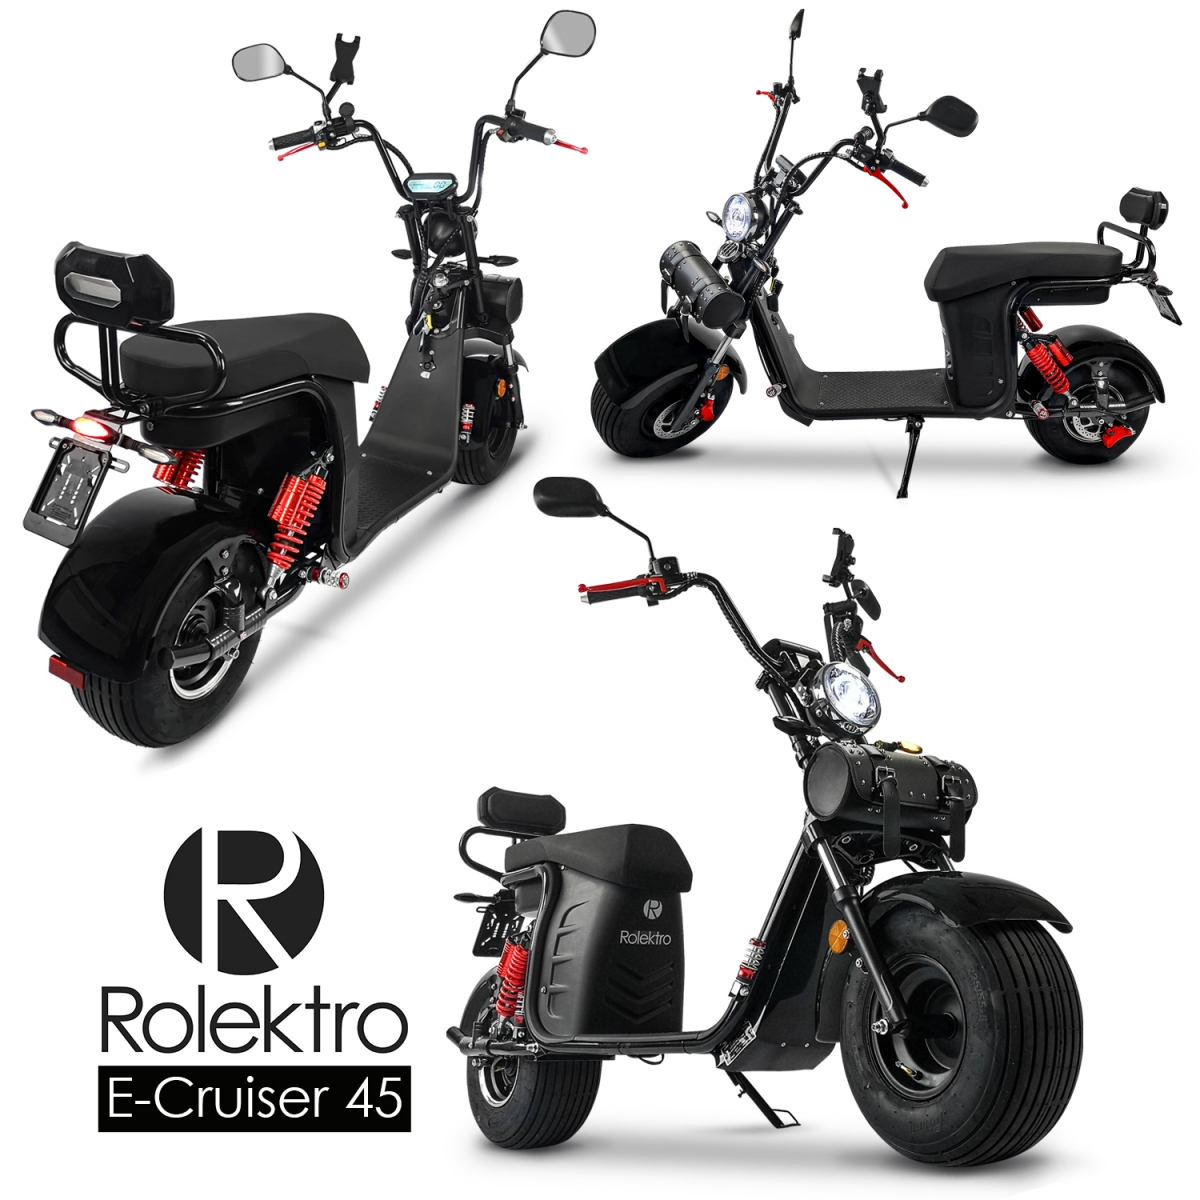 Rolektro E-Cruiser 45 km/h | doppelte Reichweite | 2-Personen | Akku herausnehmbar